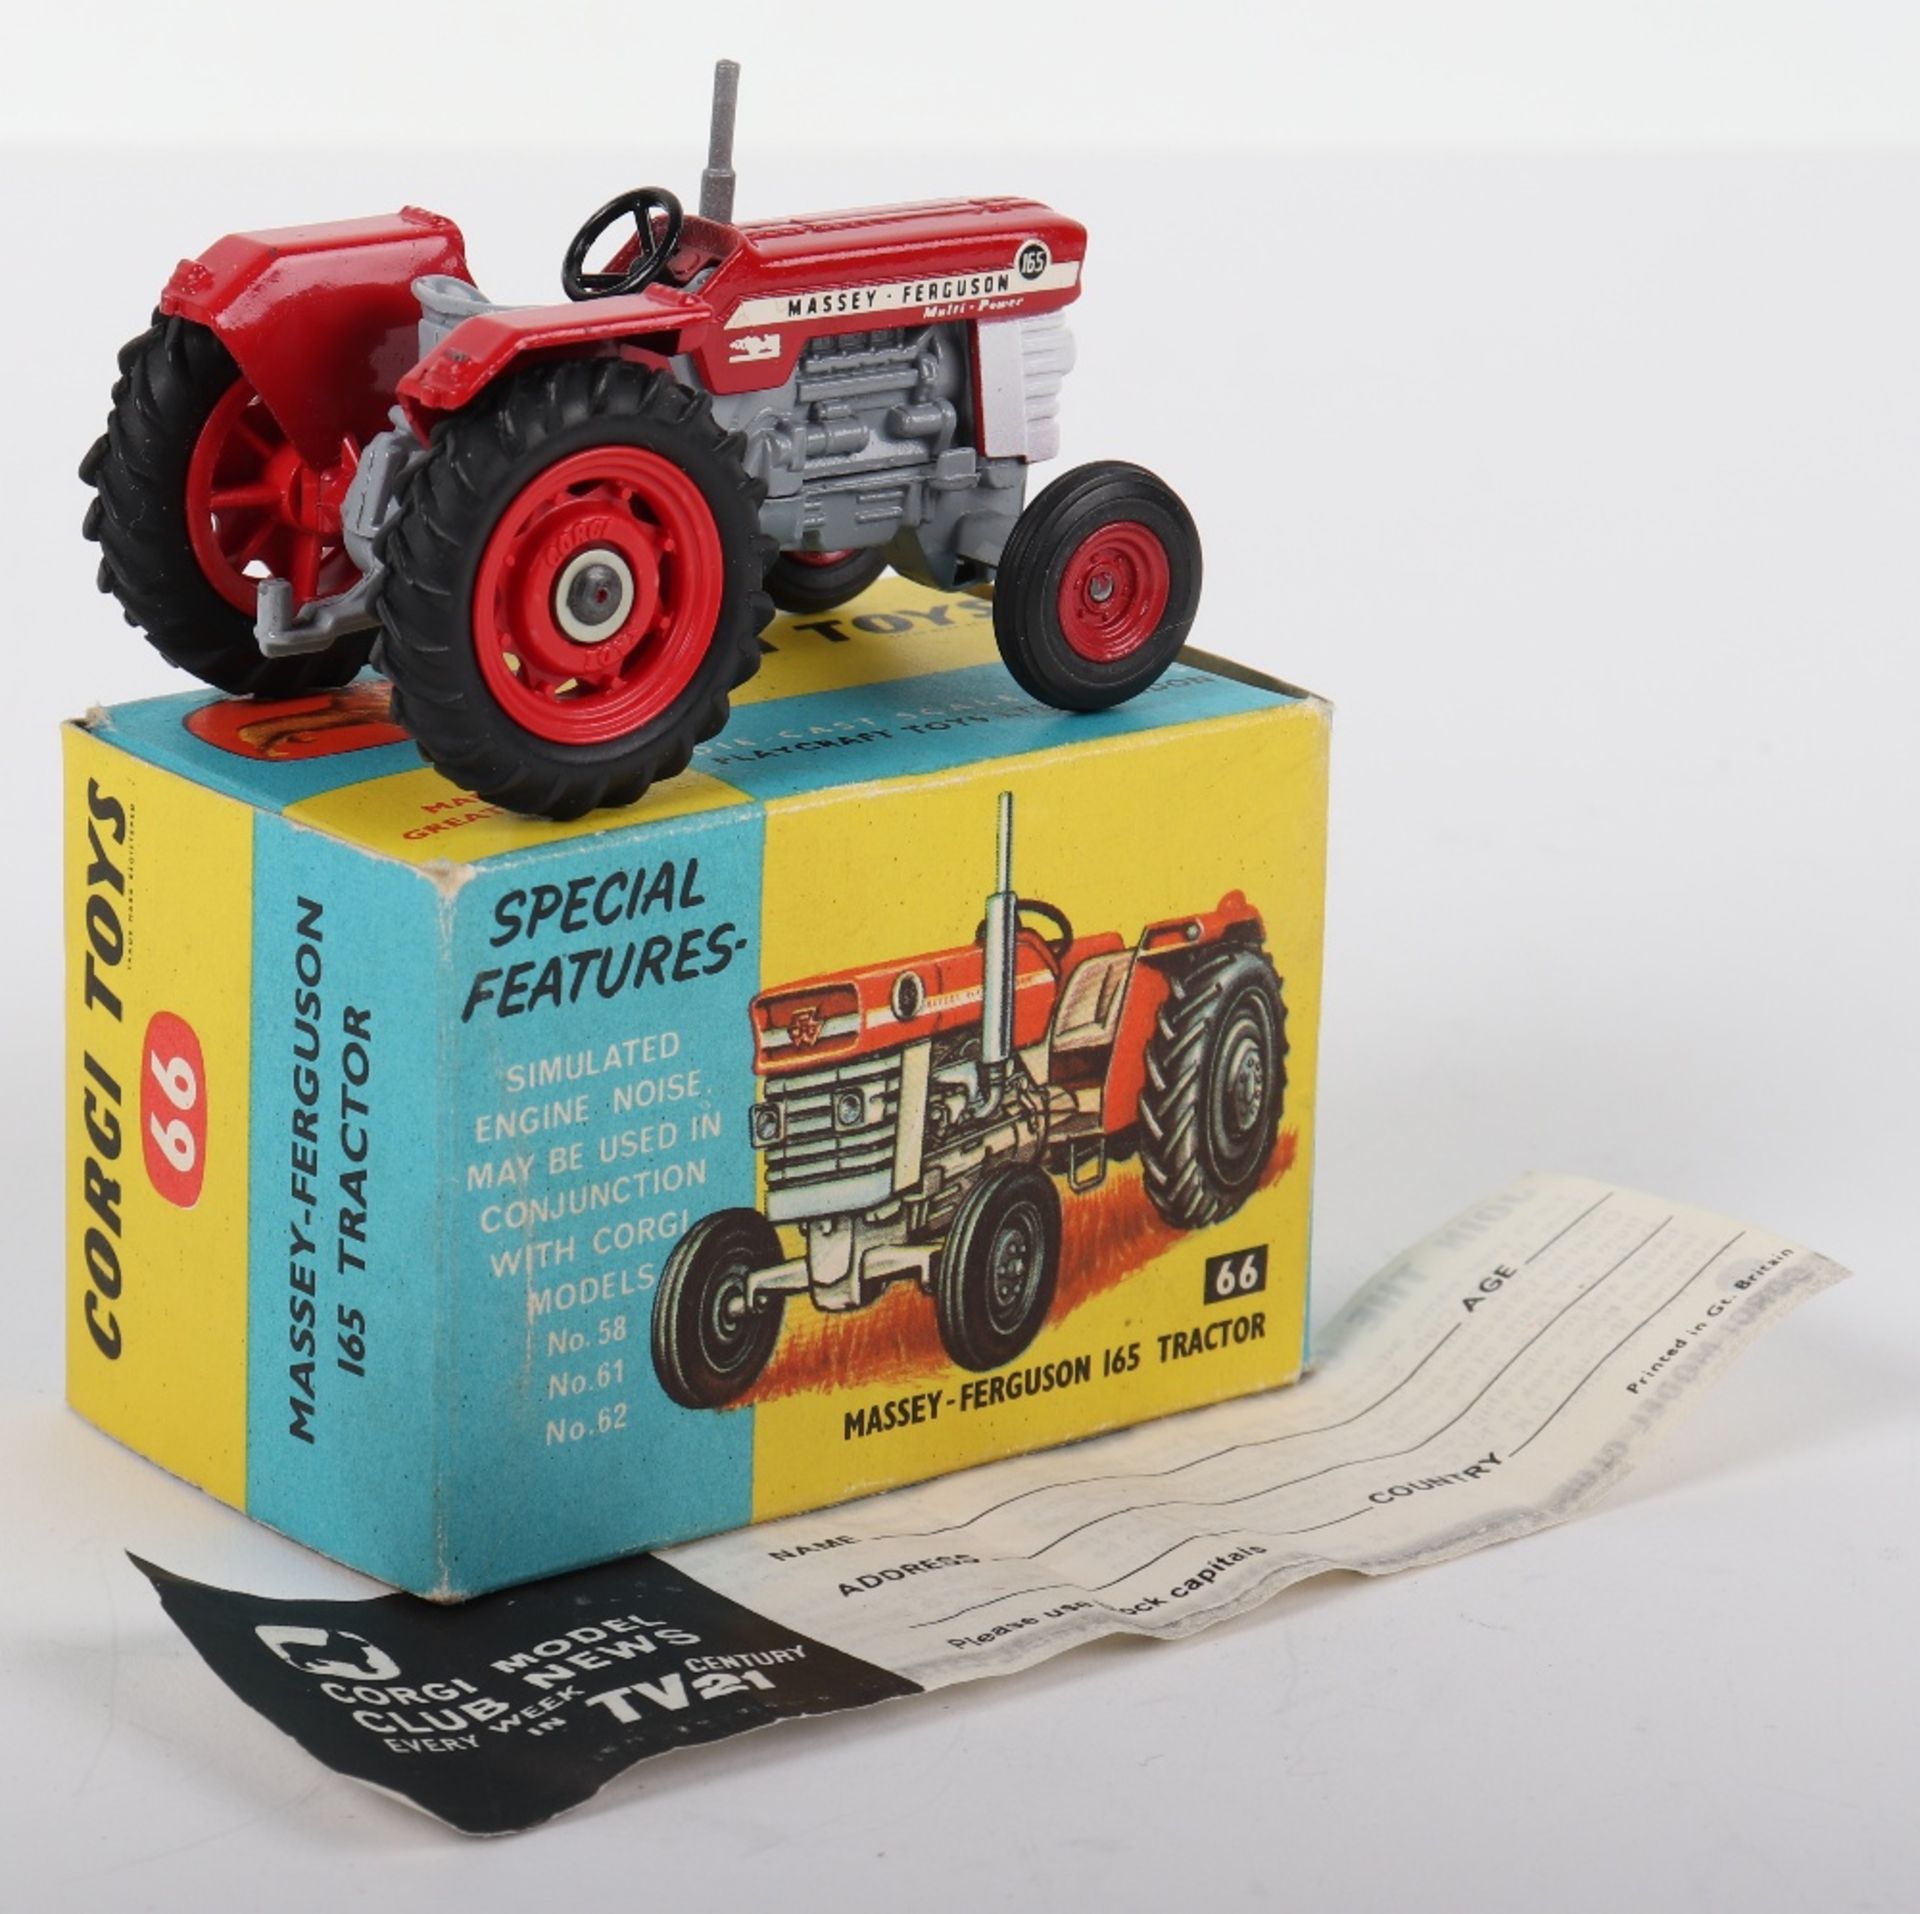 Corgi Toys 66 Massey Ferguson 165 Tractor - Image 3 of 3